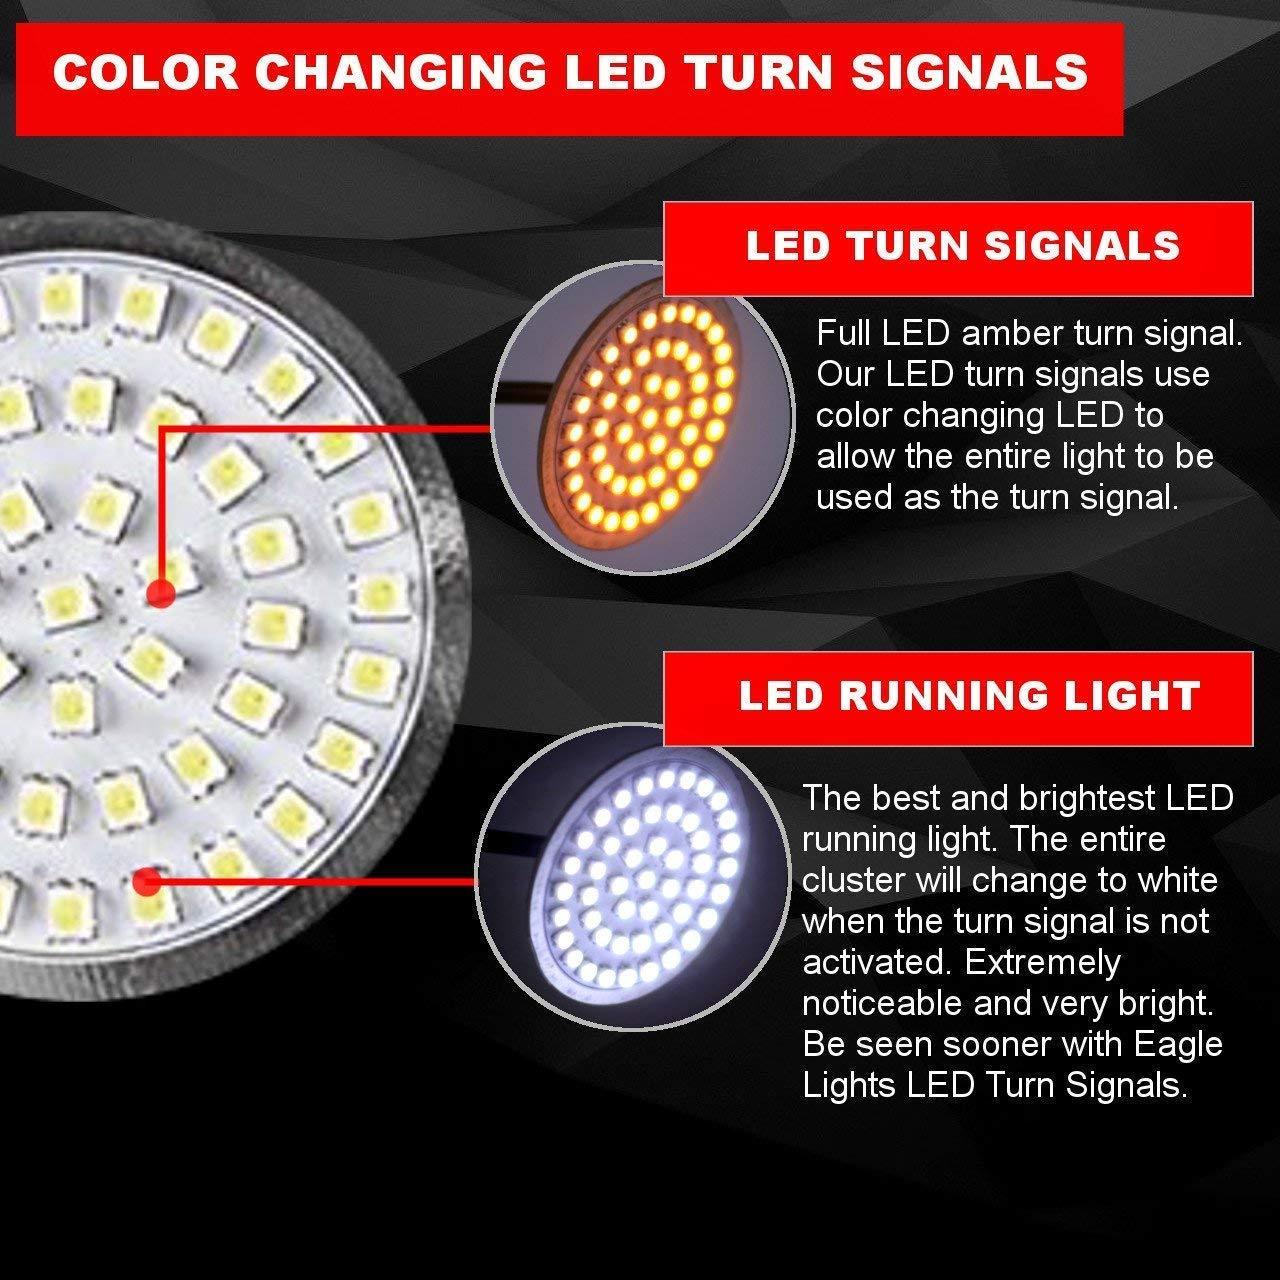 2” LED Turn Signal Kits - Eagle Lights LED Generation II Turn Signals (Front (1157) And Rear HALO (1157)) LED Turn Signal Kit